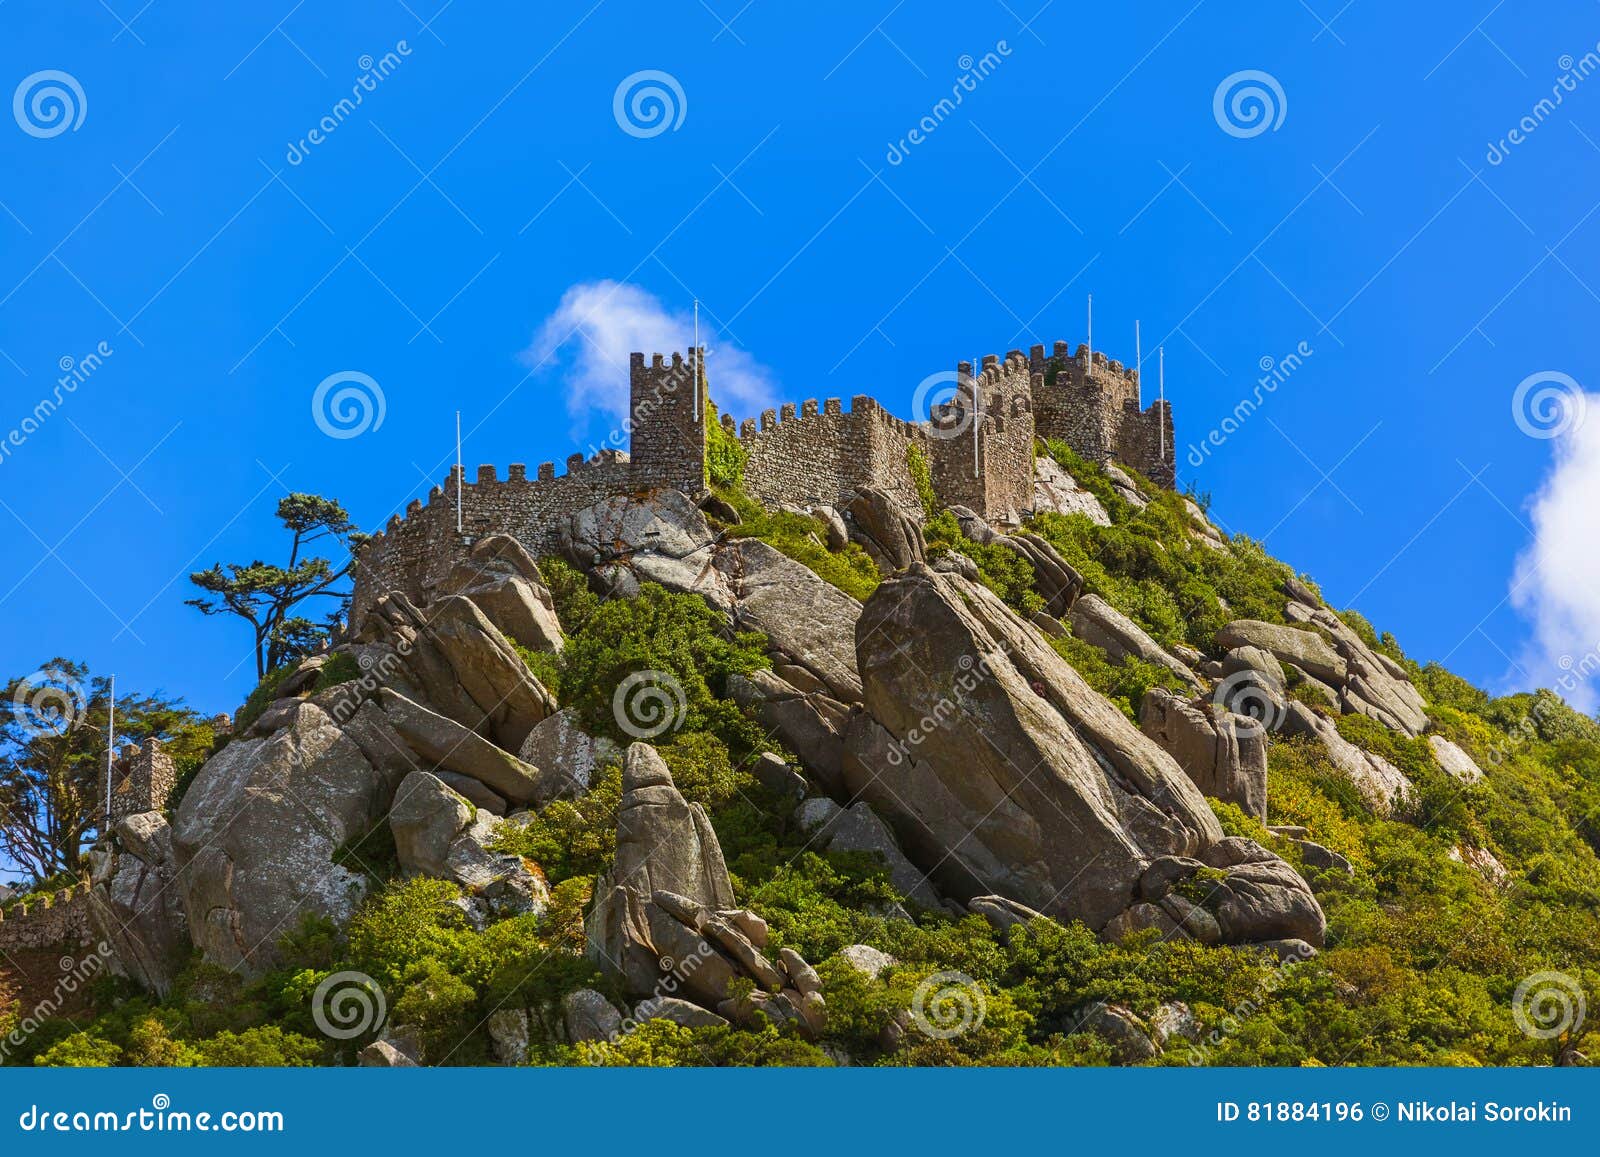 moorish castle in sintra - portugal